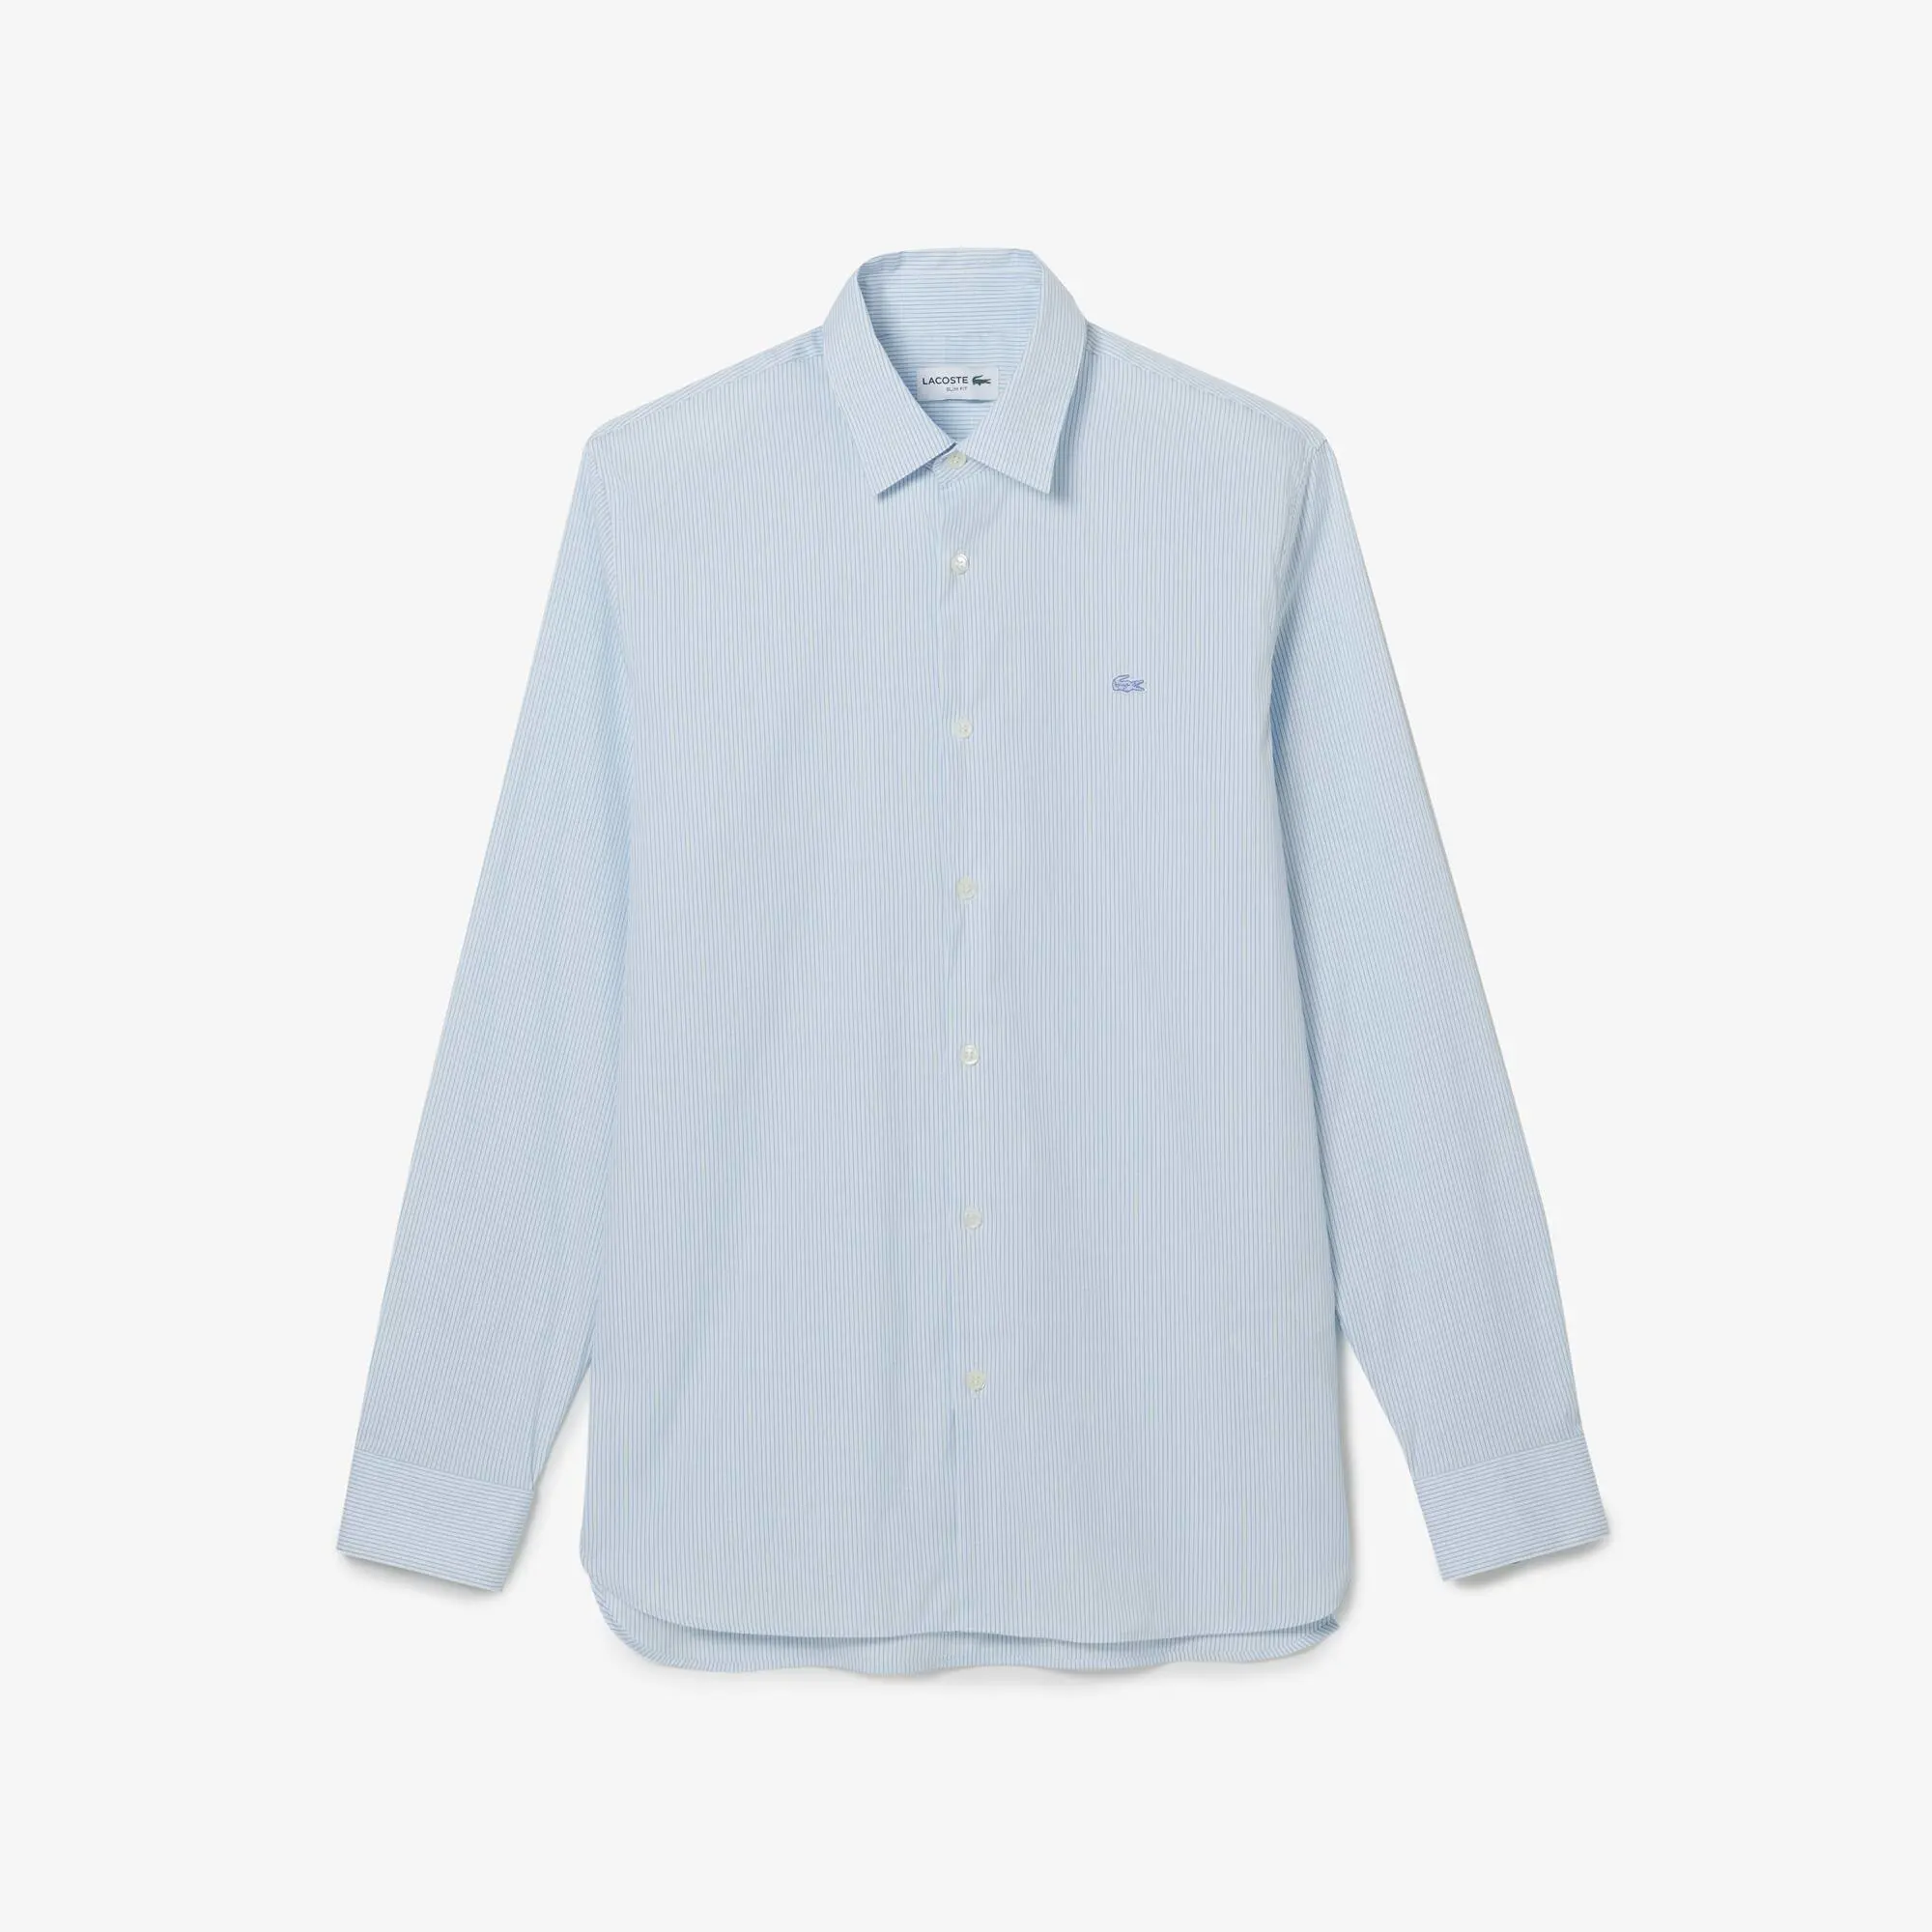 Lacoste Men's Slim Fit Check Stretch Poplin Shirt. 2